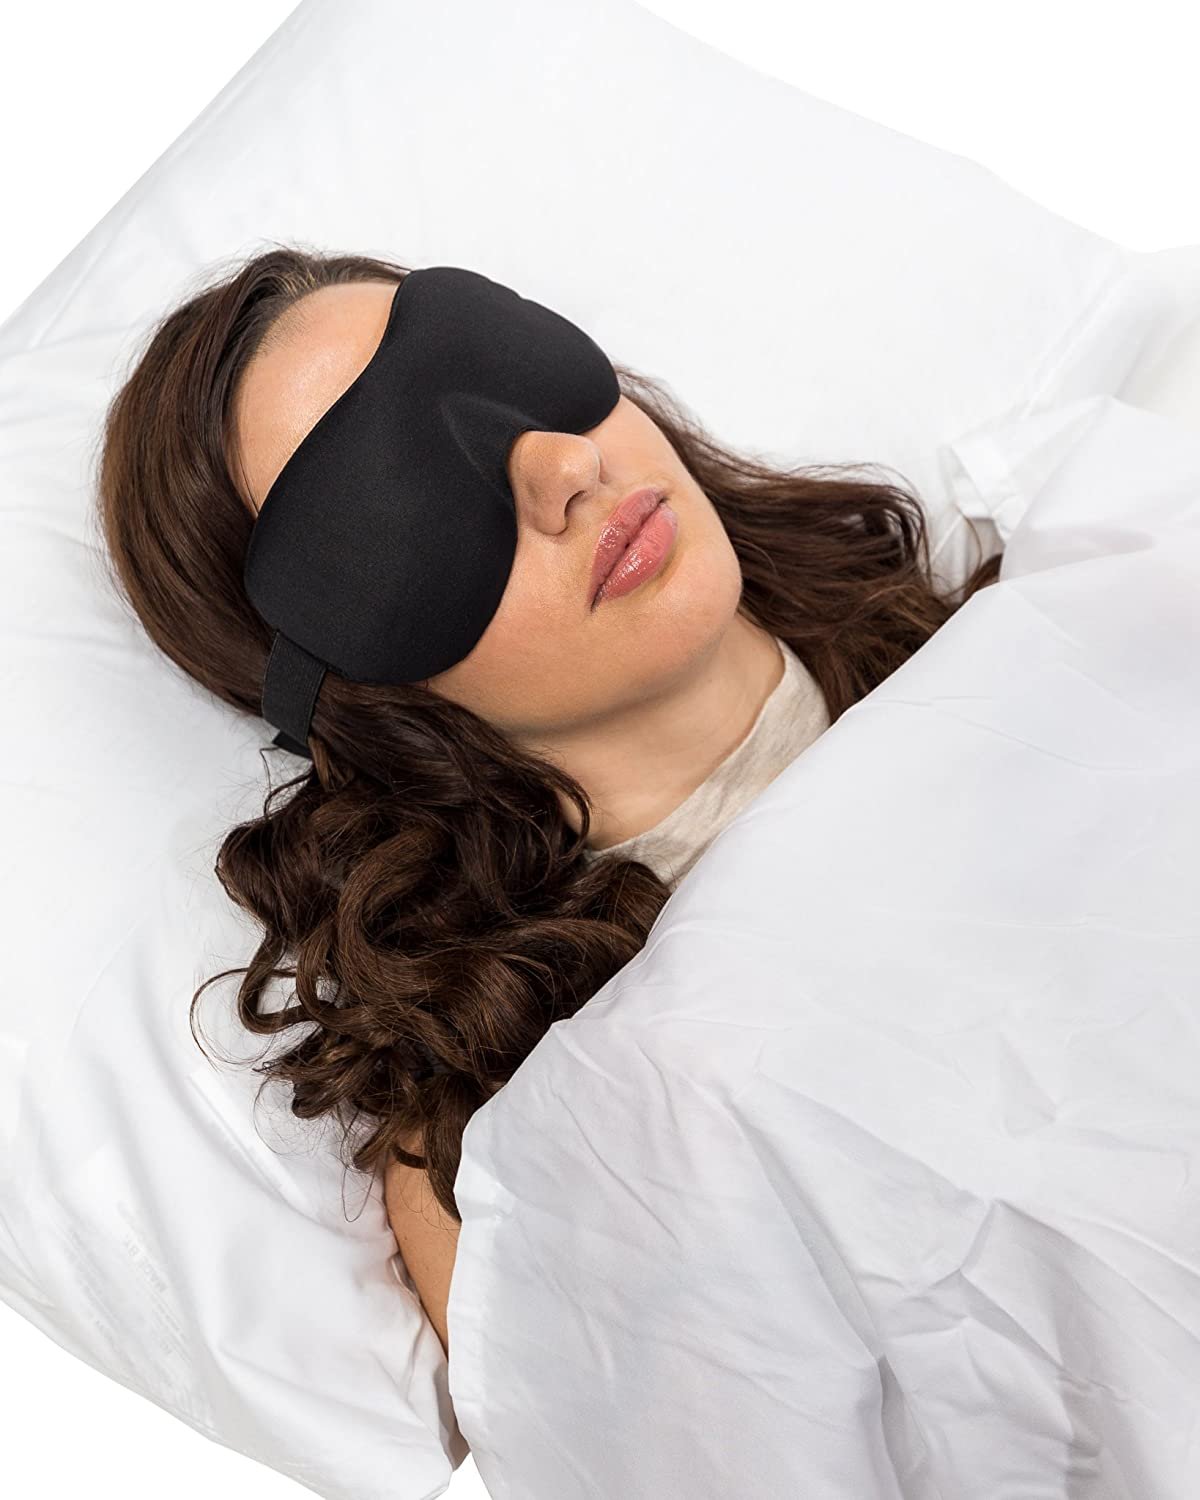 Premium Eye Shade Sleep Eye Mask and Ear Plugs - Ultra Soft and Silky for a Enchanting Blissful Sleep - Mars Med Supply